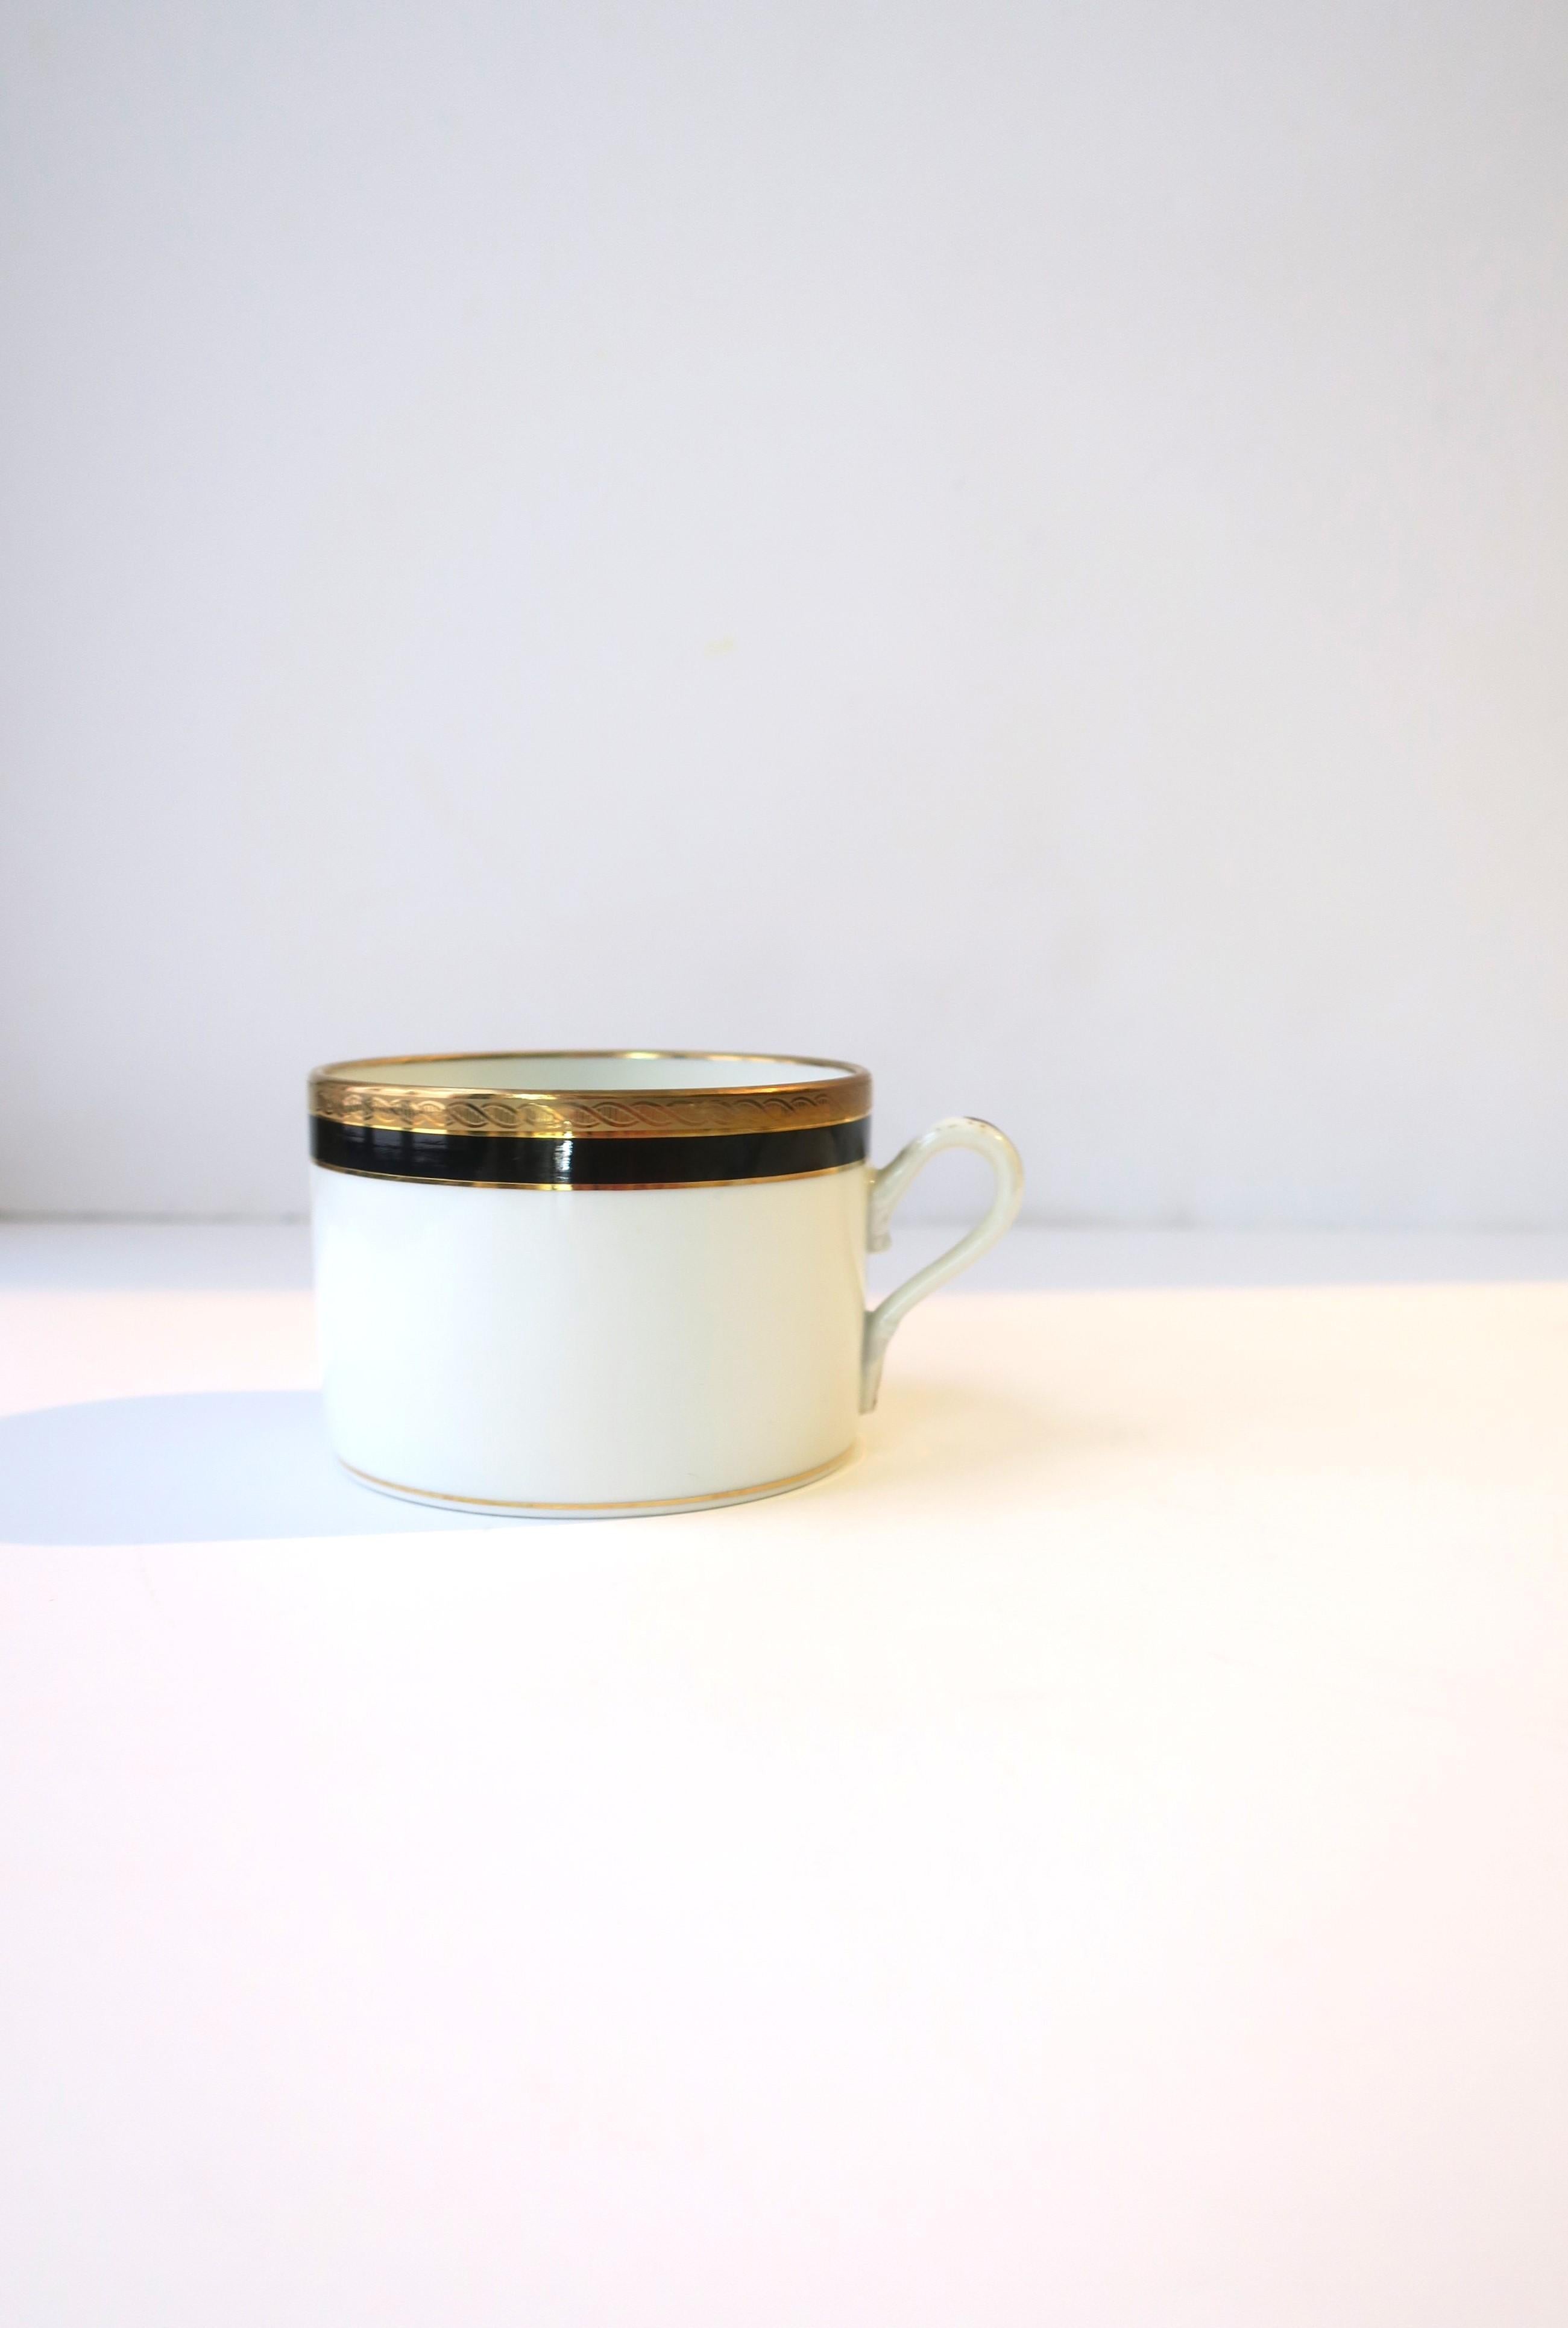 Italian Richard Ginori Vintage Black Gold Porcelain Coffee or Tea Cup & Saucer For Sale 4